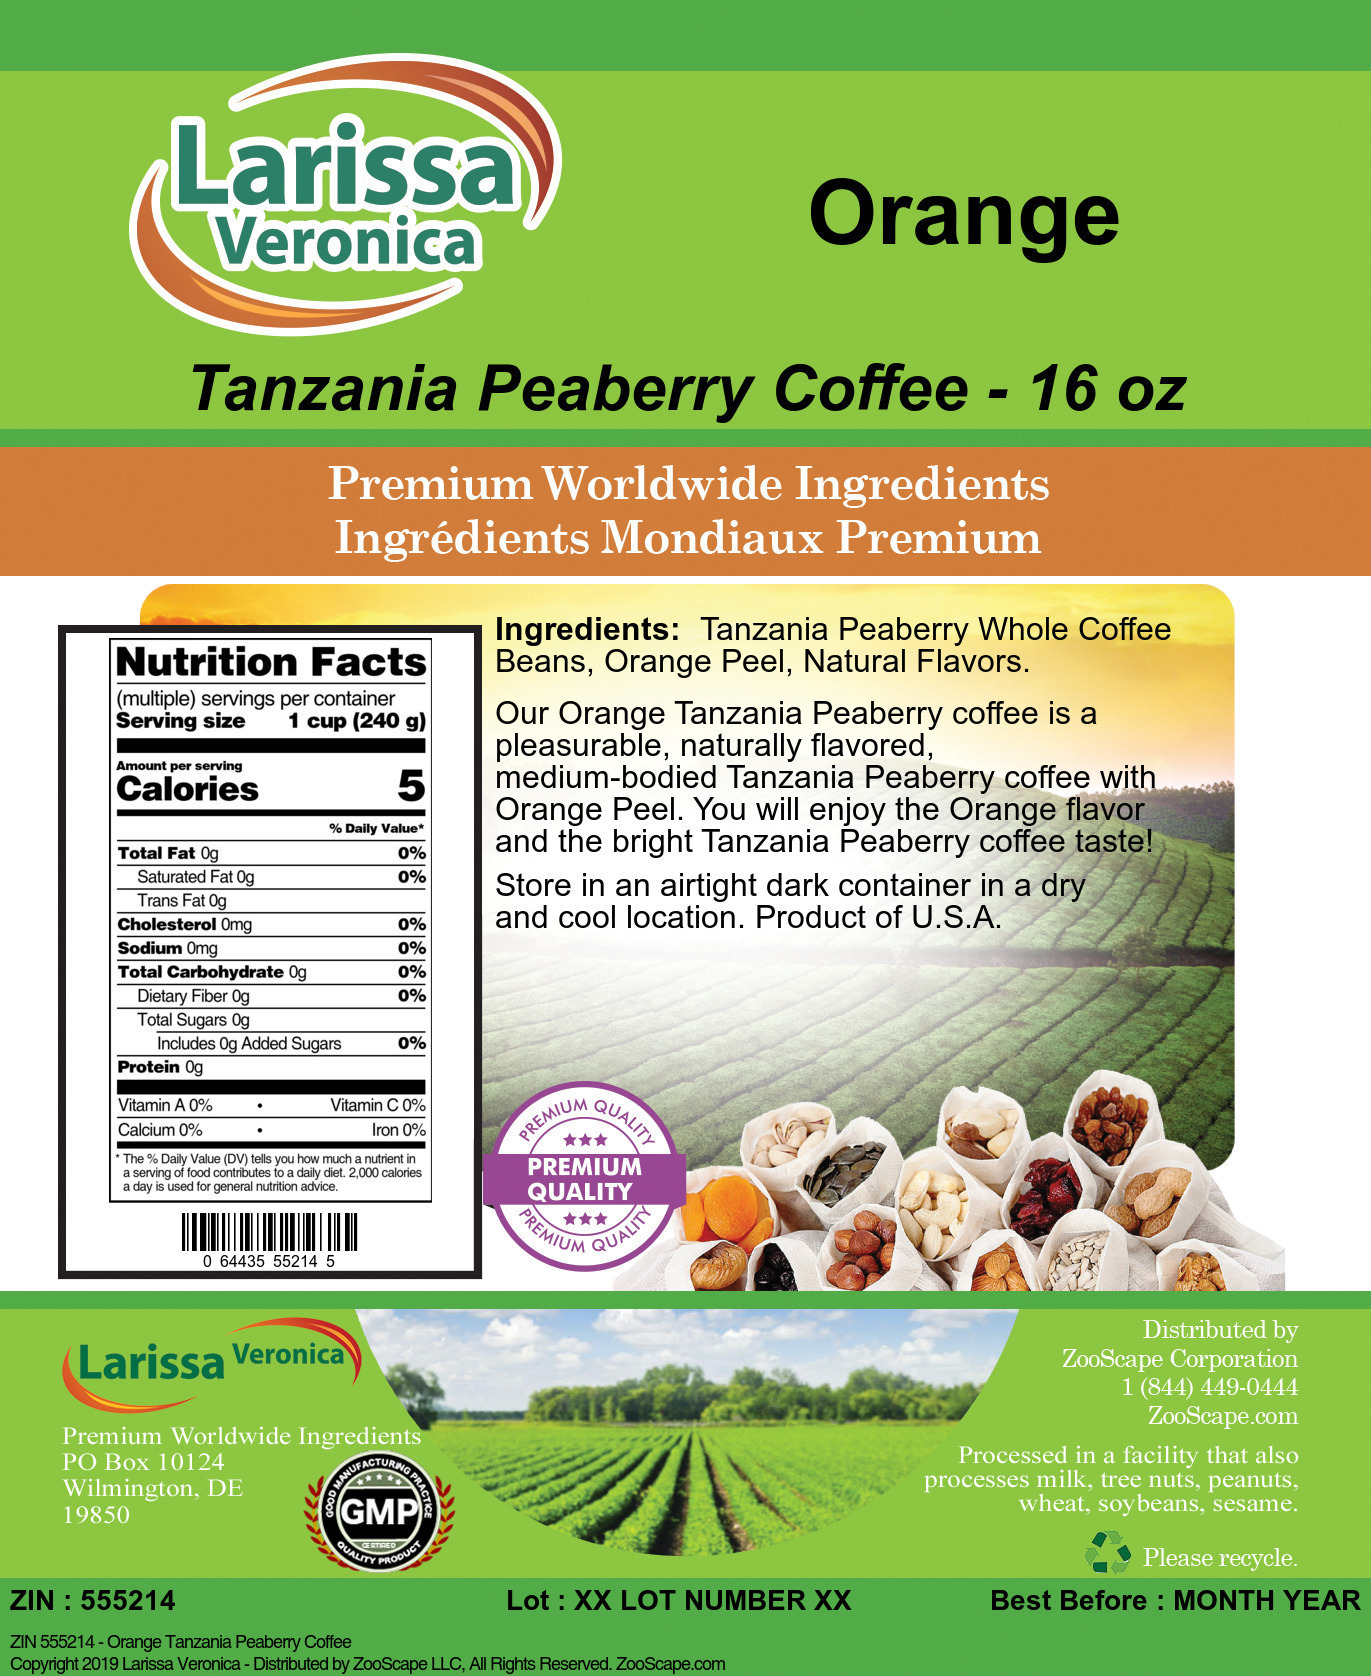 Orange Tanzania Peaberry Coffee - Label